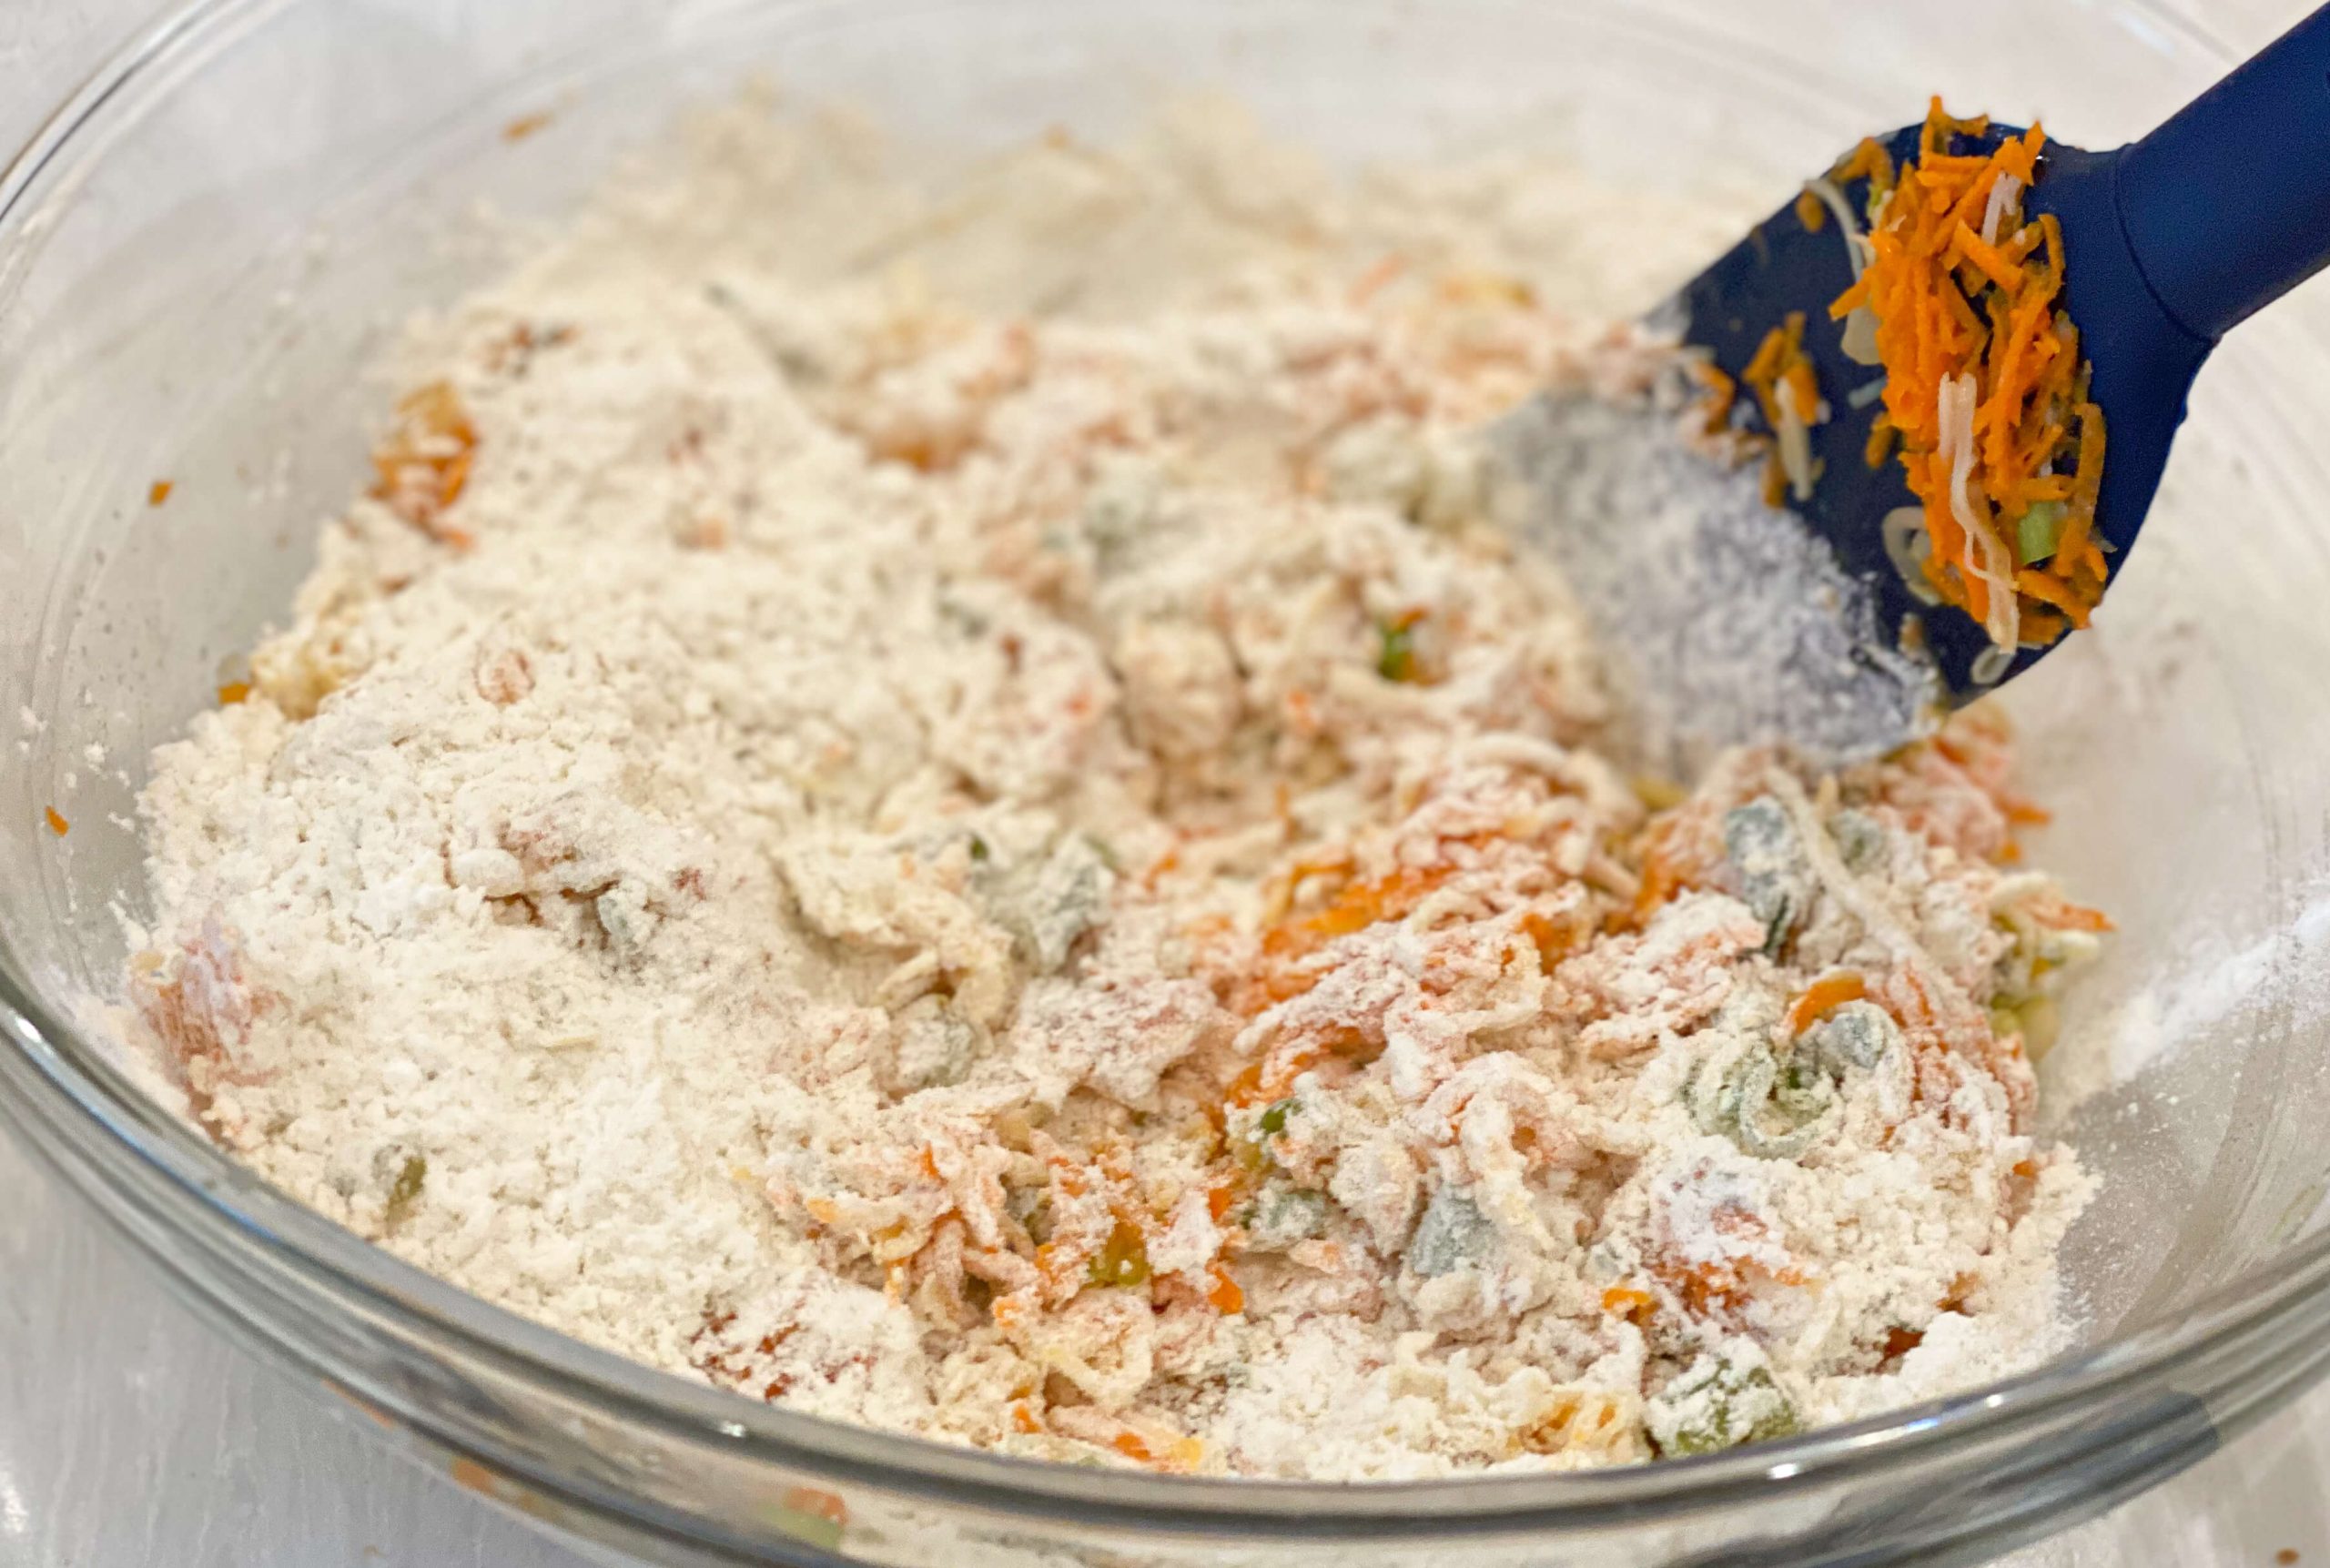 flour mixture and carrot mixture mixed together